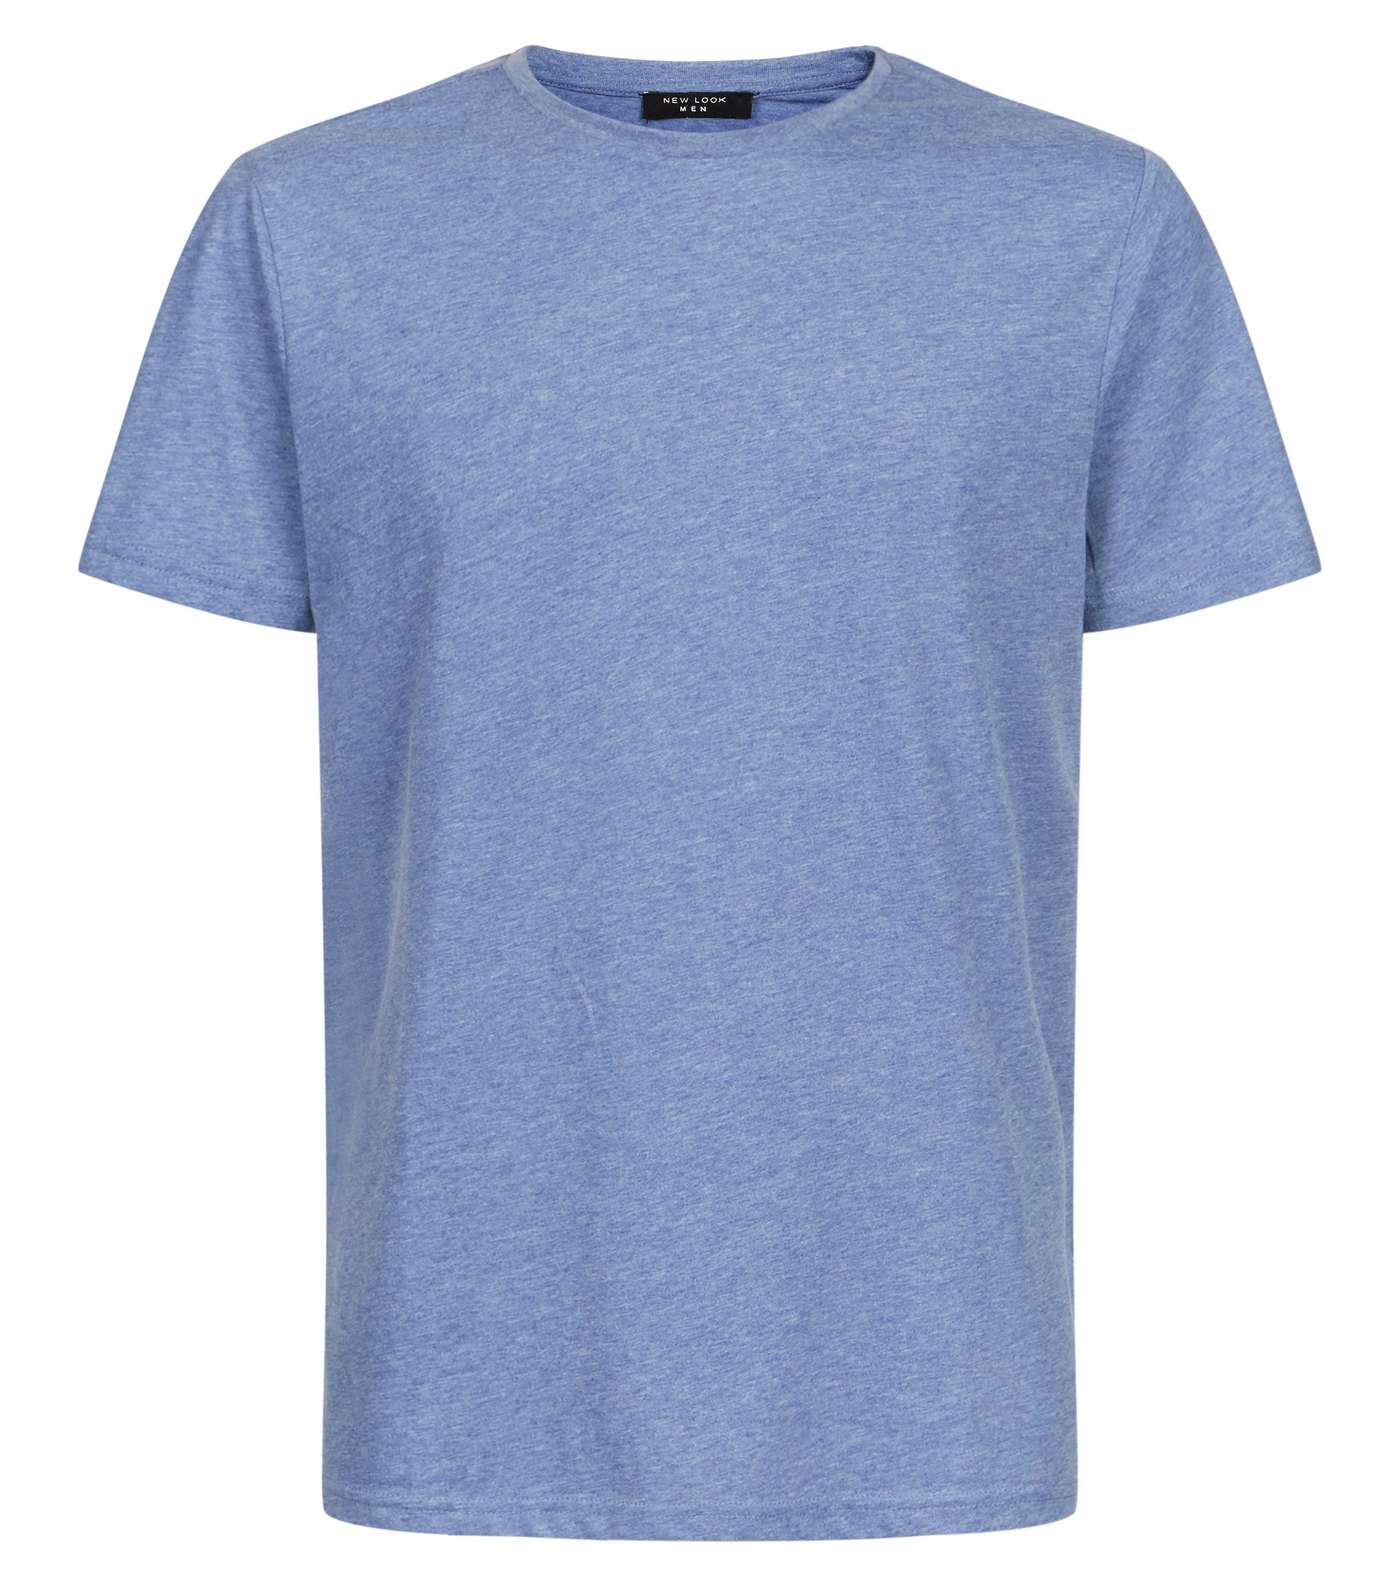 Blue Marl Crew Neck Cotton T-Shirt Image 4